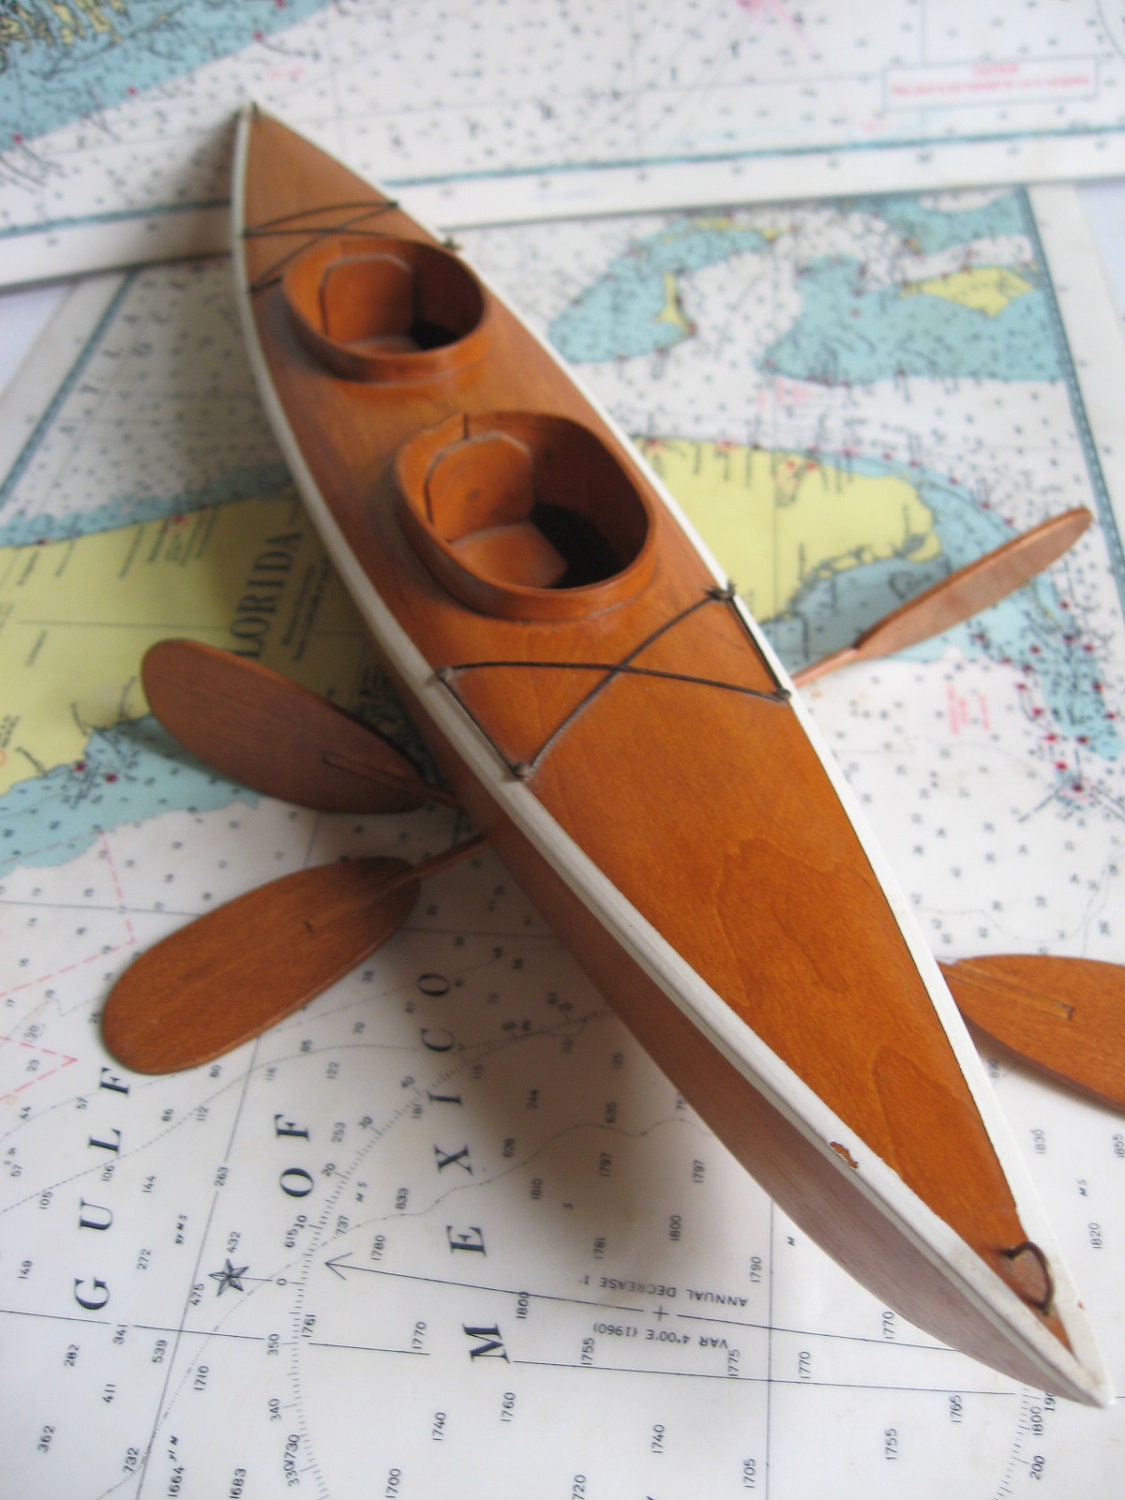 Vintage 1950s Model BOAT KAYAK Toy Wood Canoe Indigenous